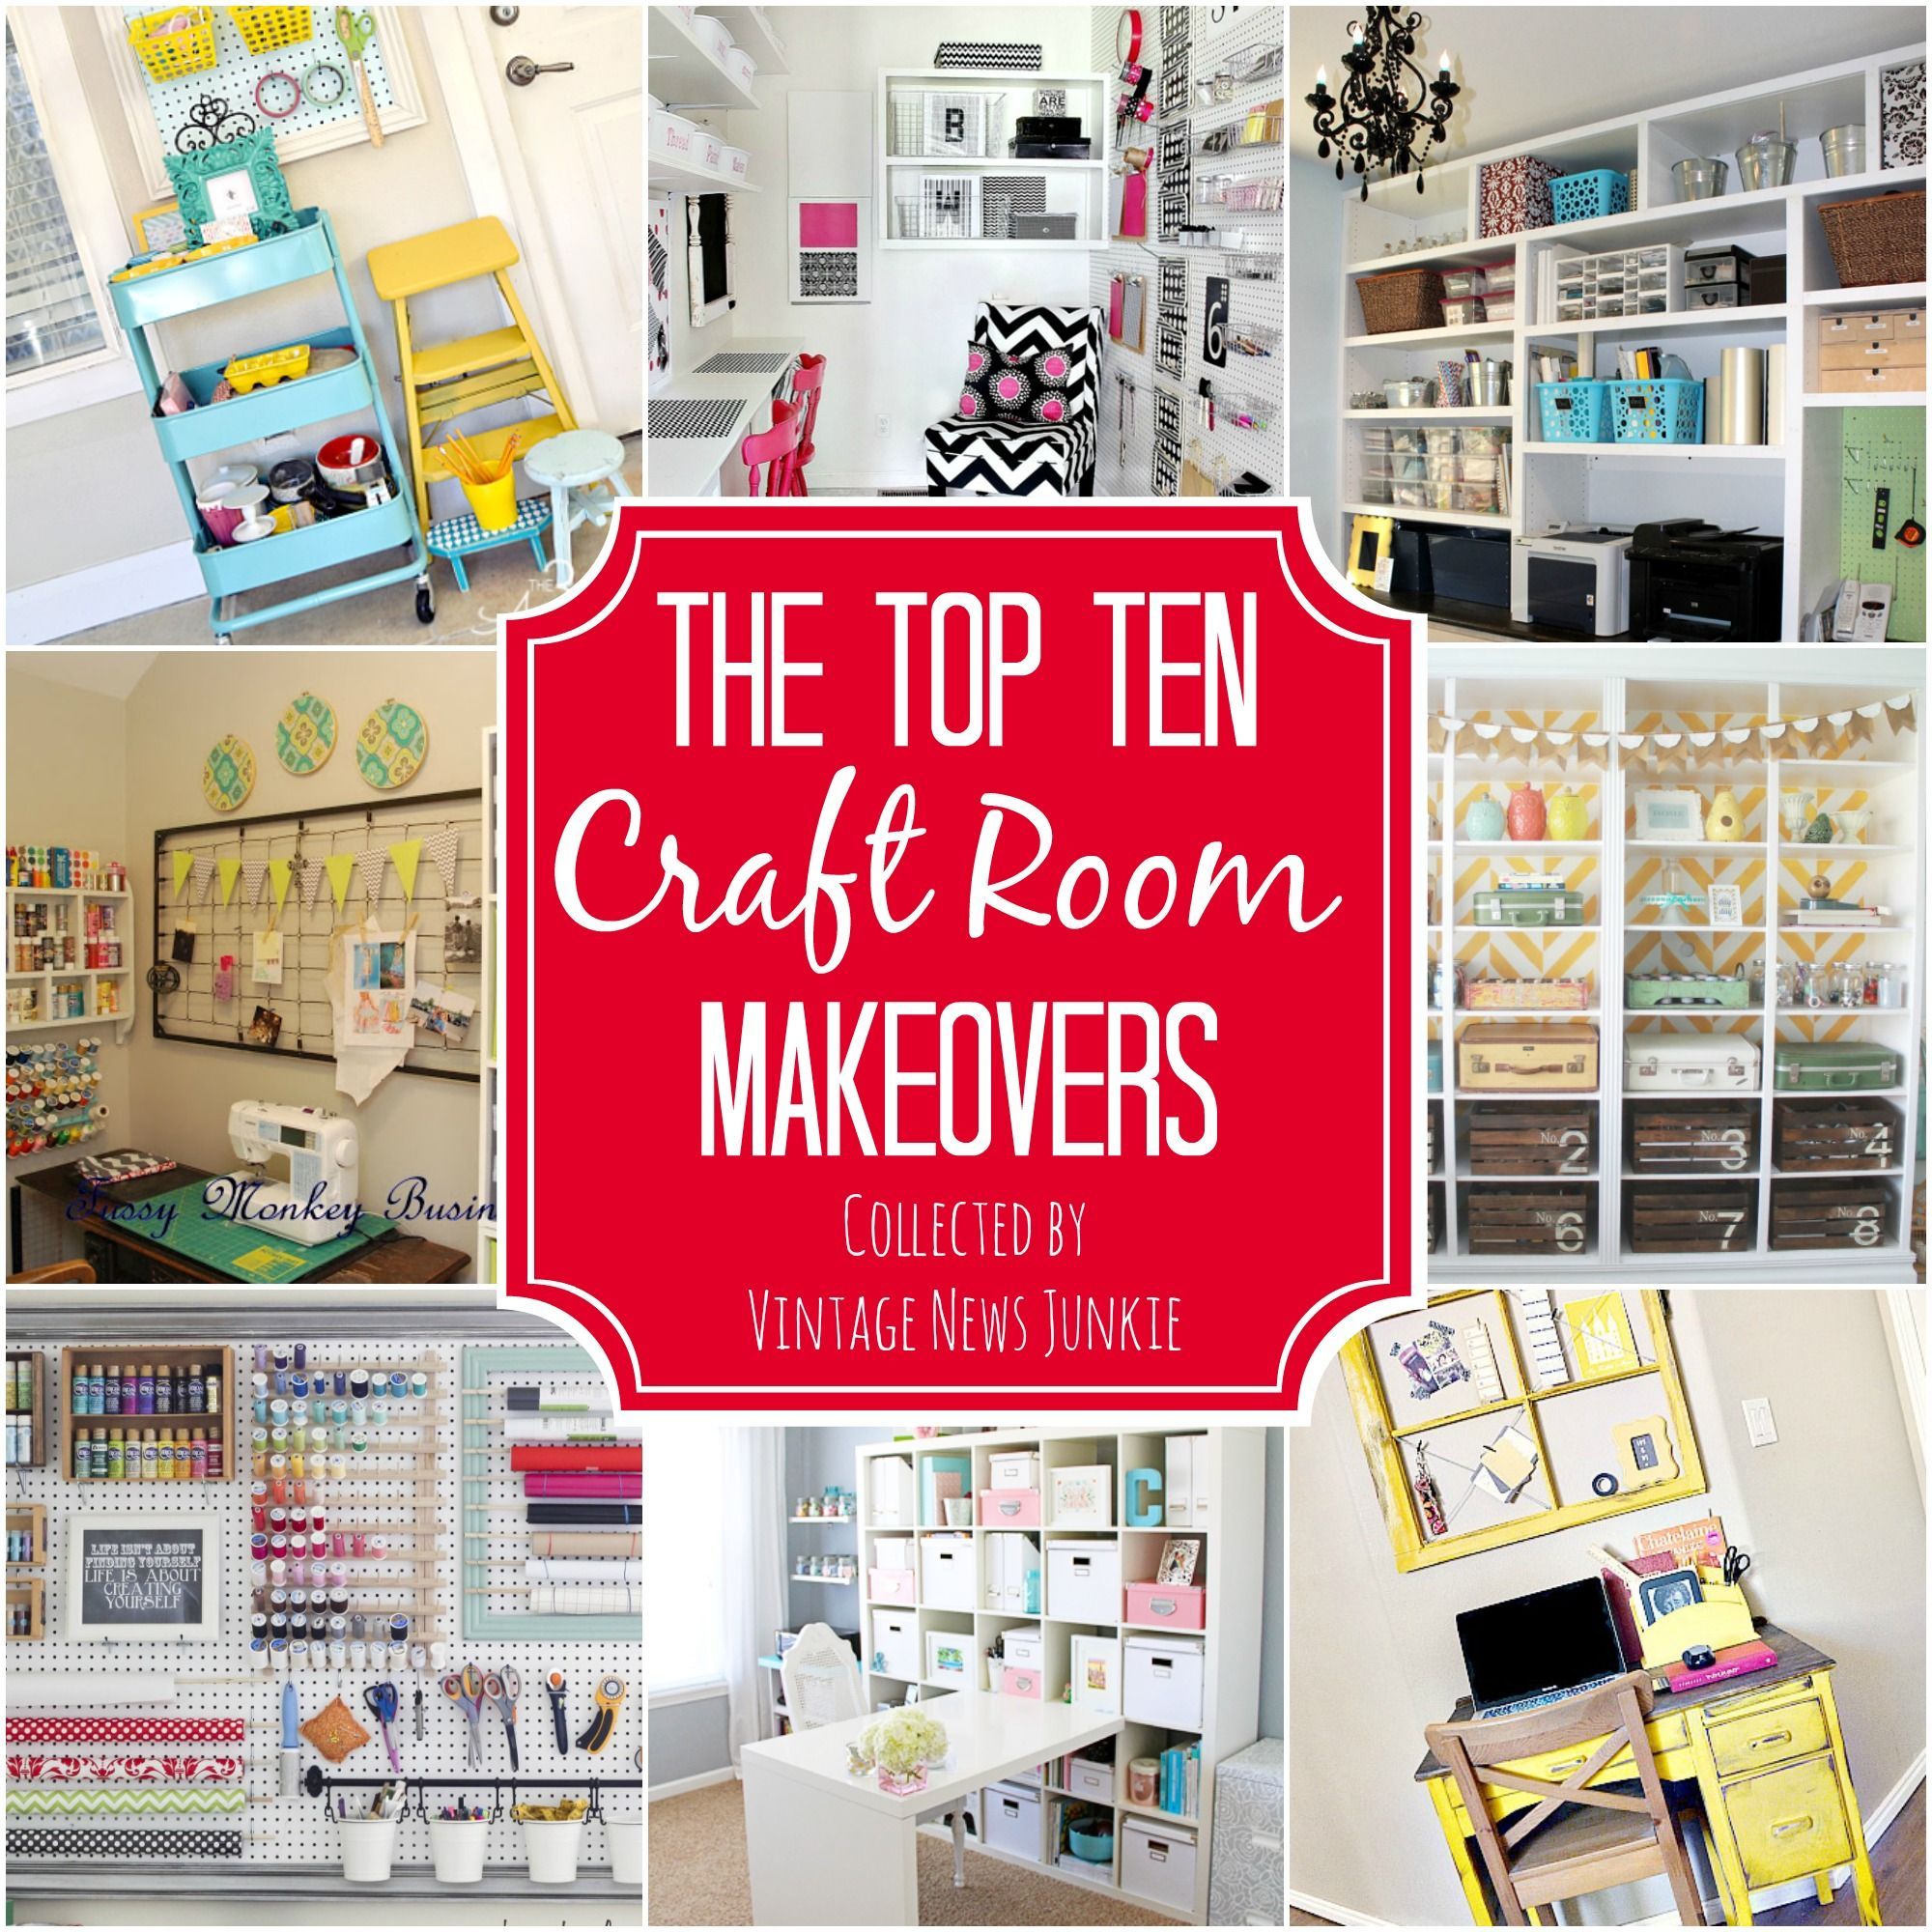 Awesome Inspiration & Organization Ideas for a Craft Room #organization #craftro